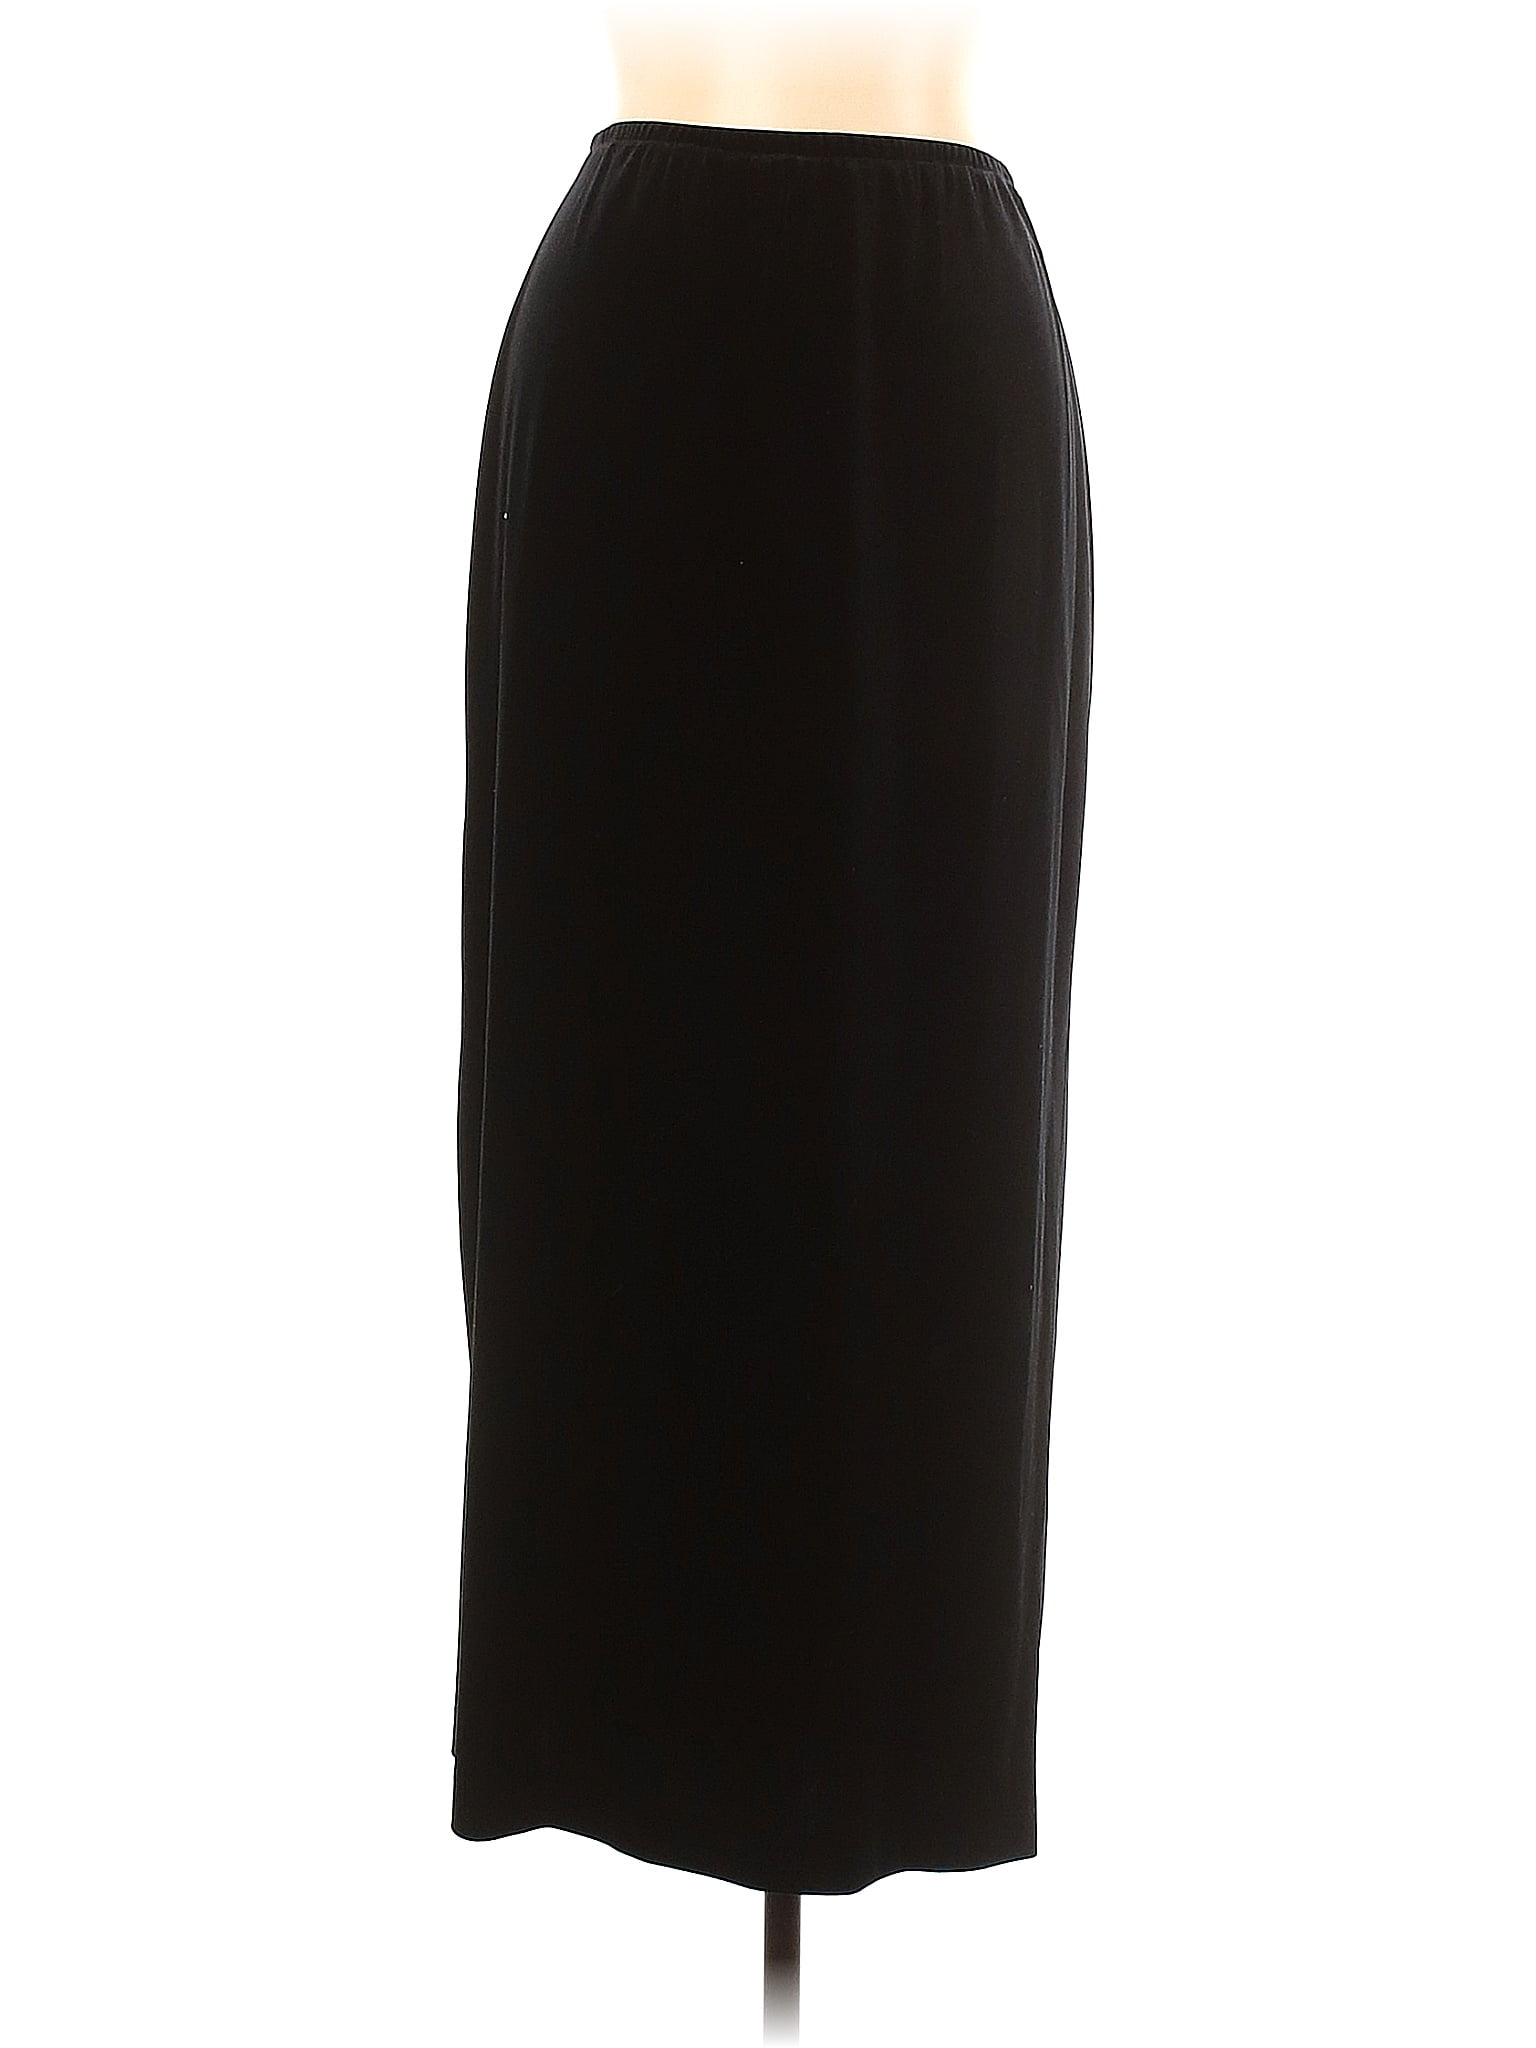 Assorted Brands Black Casual Skirt Size 42 (EU) - 52% off | thredUP